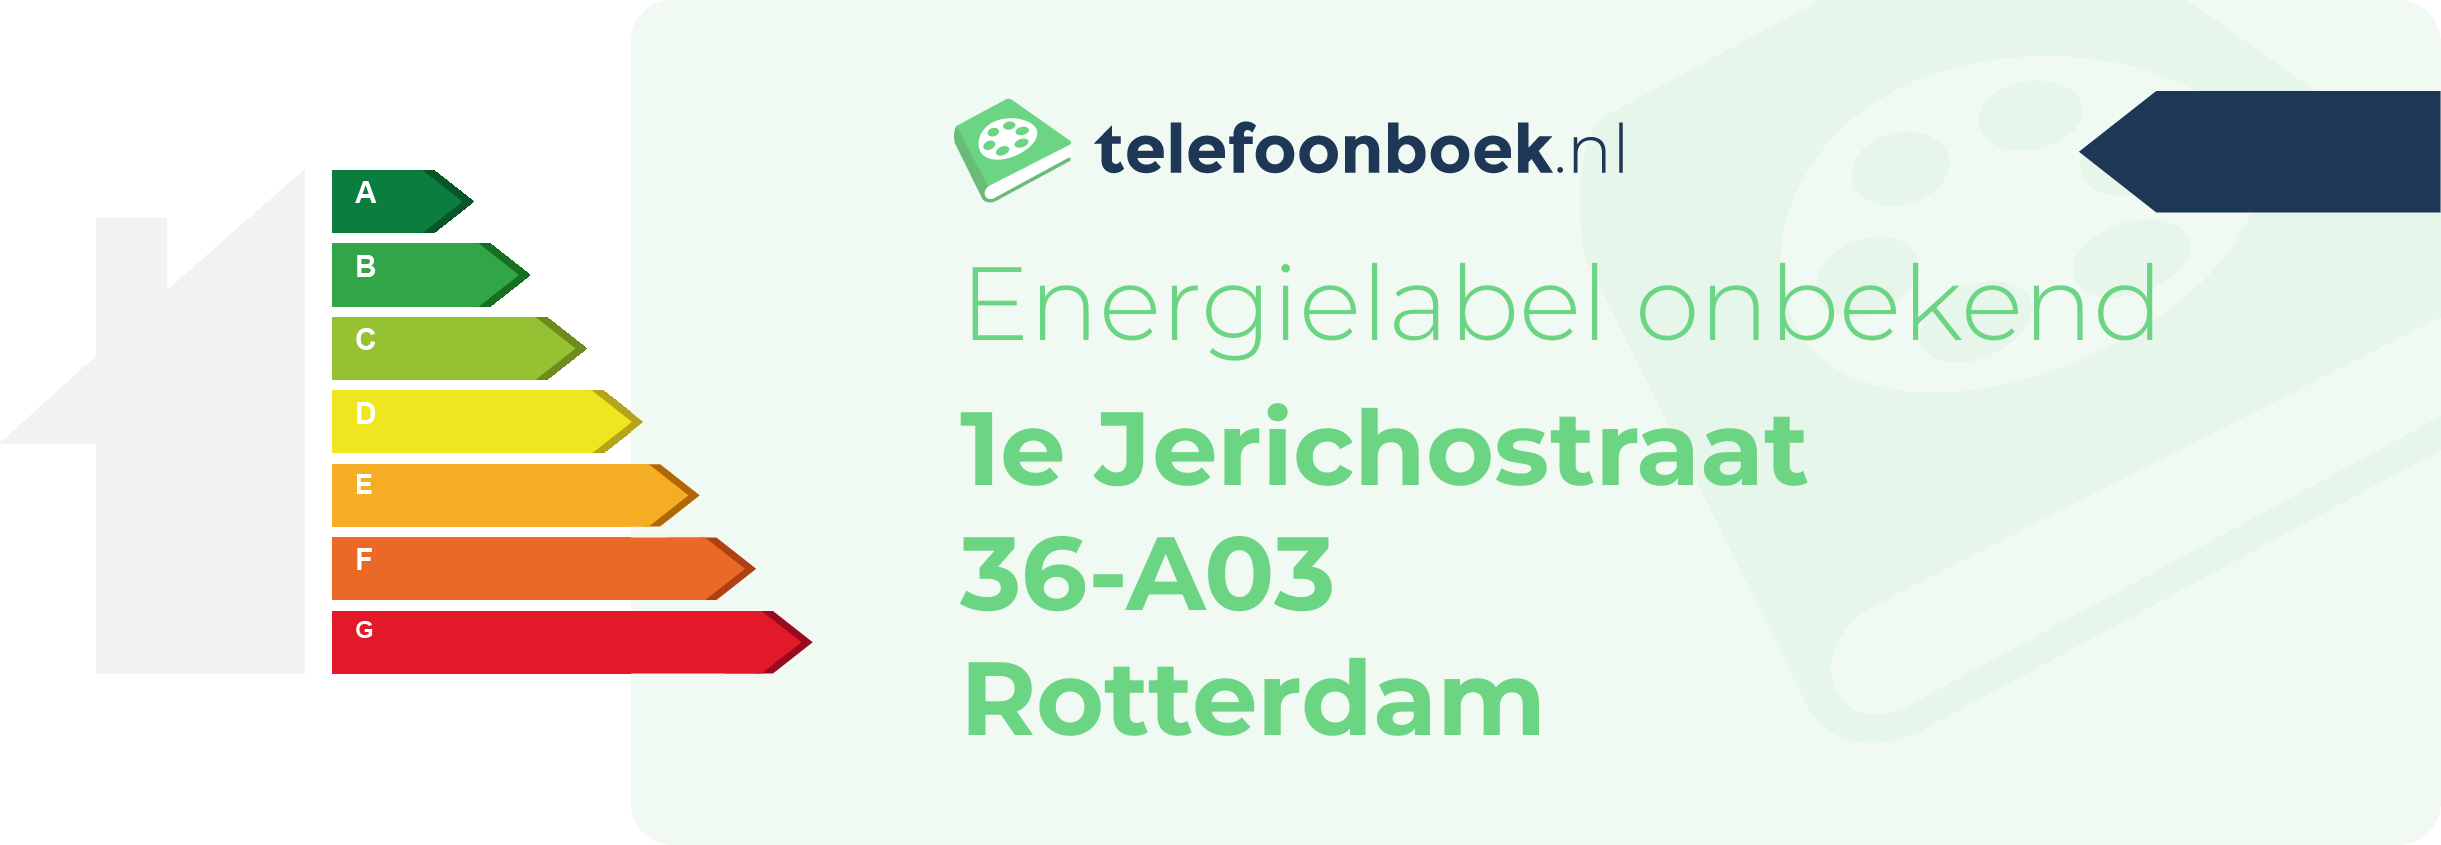 Energielabel 1e Jerichostraat 36-A03 Rotterdam